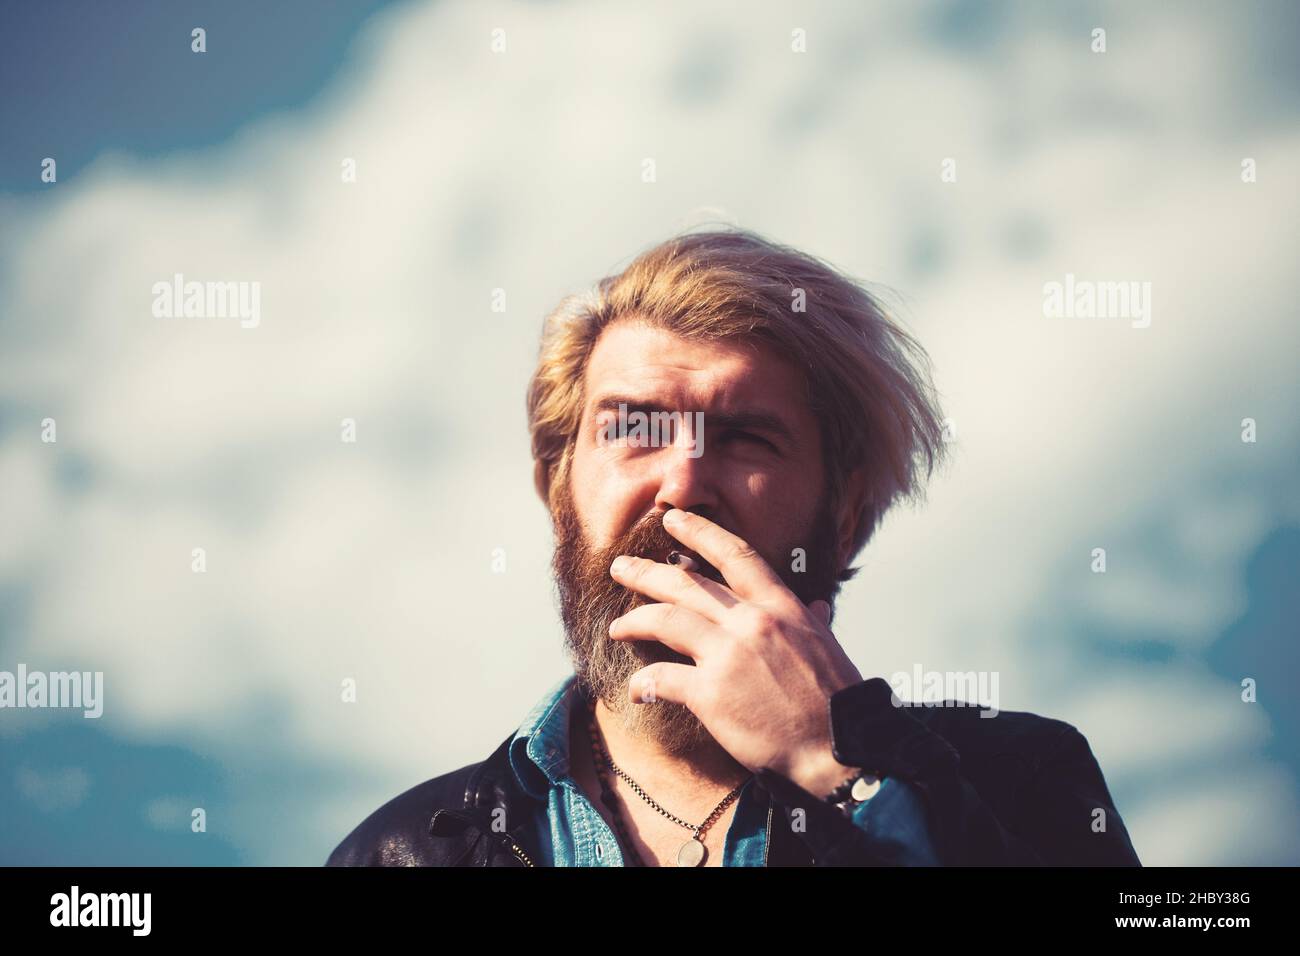 Fashion man smoking on sky background. Fashion smoker with cigarette on fresh air. Stock Photo